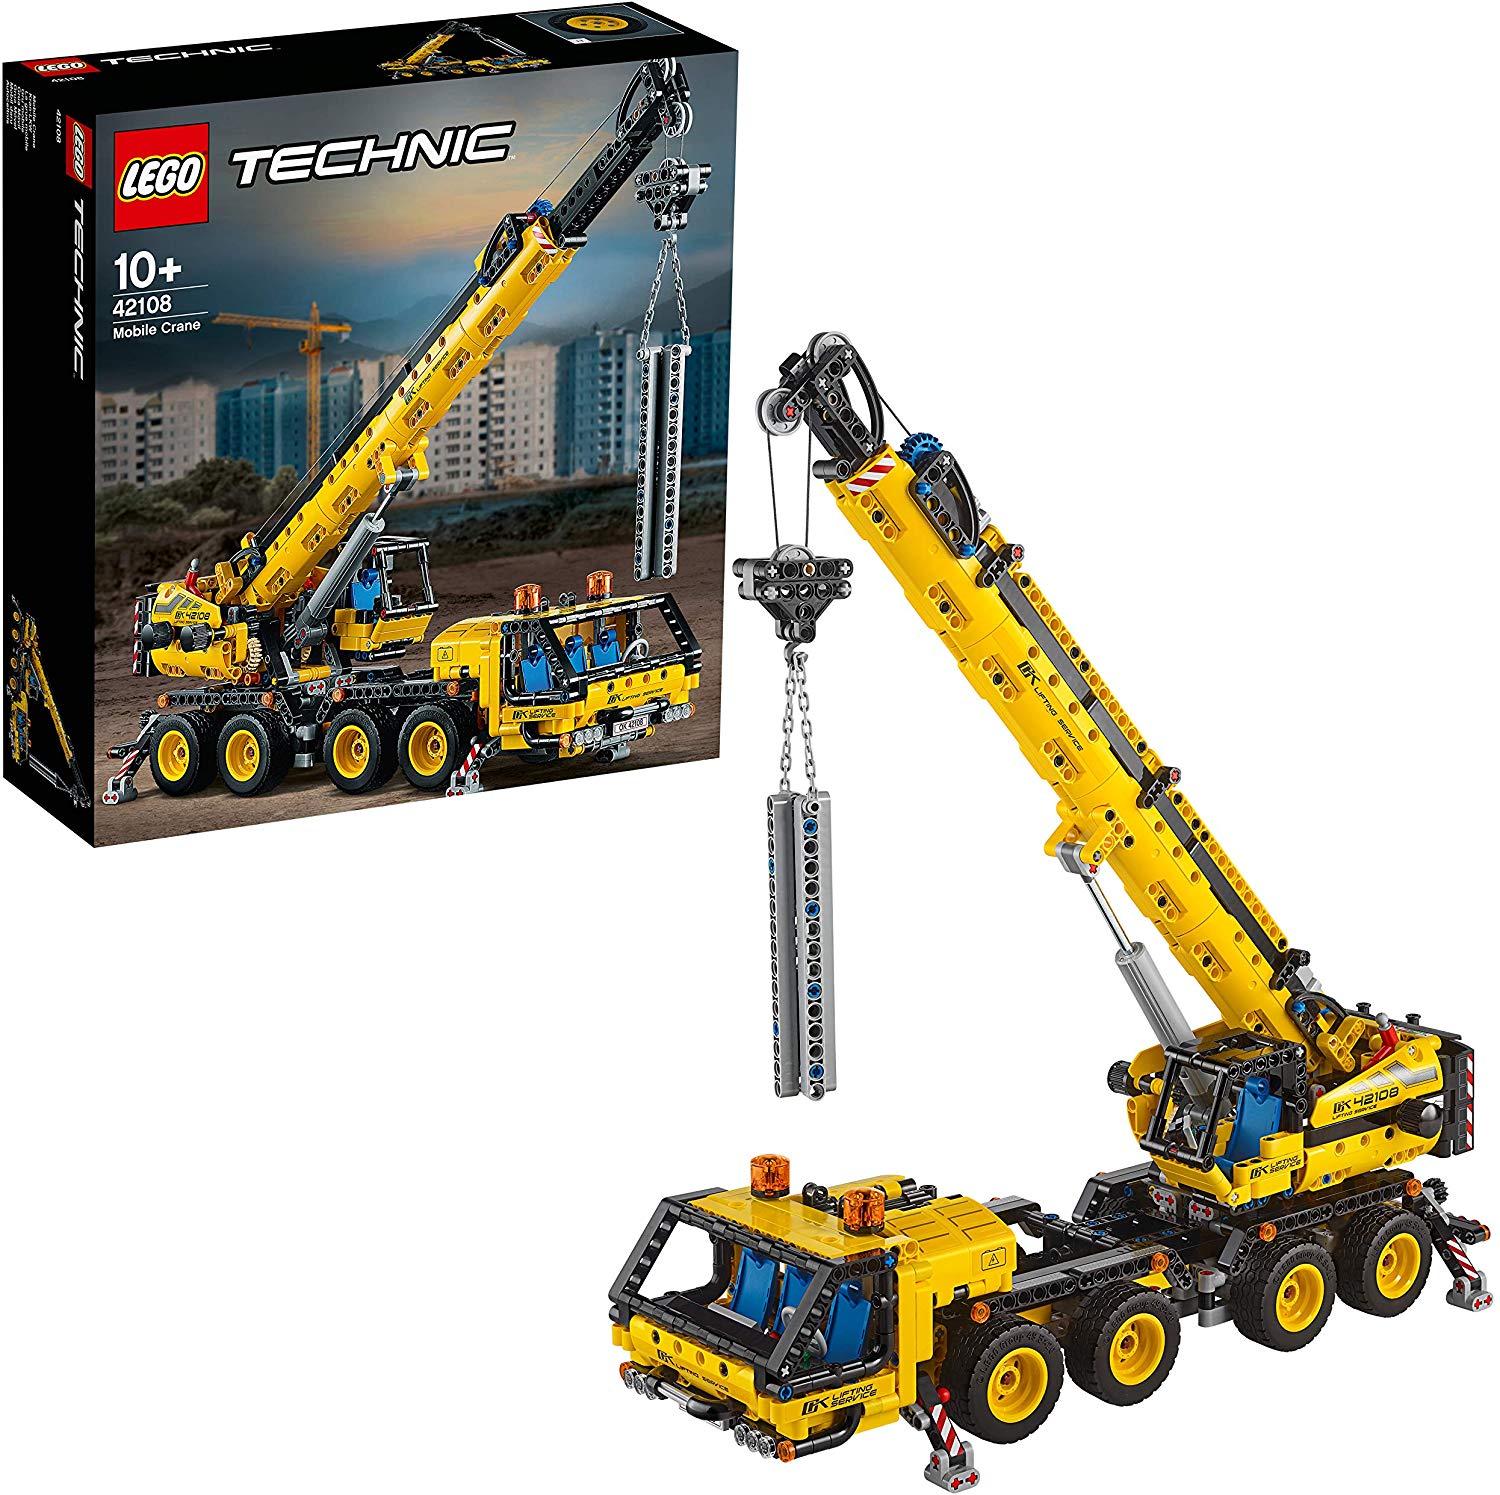 Lego 42108 - Technic Crane Truck Construction Kit